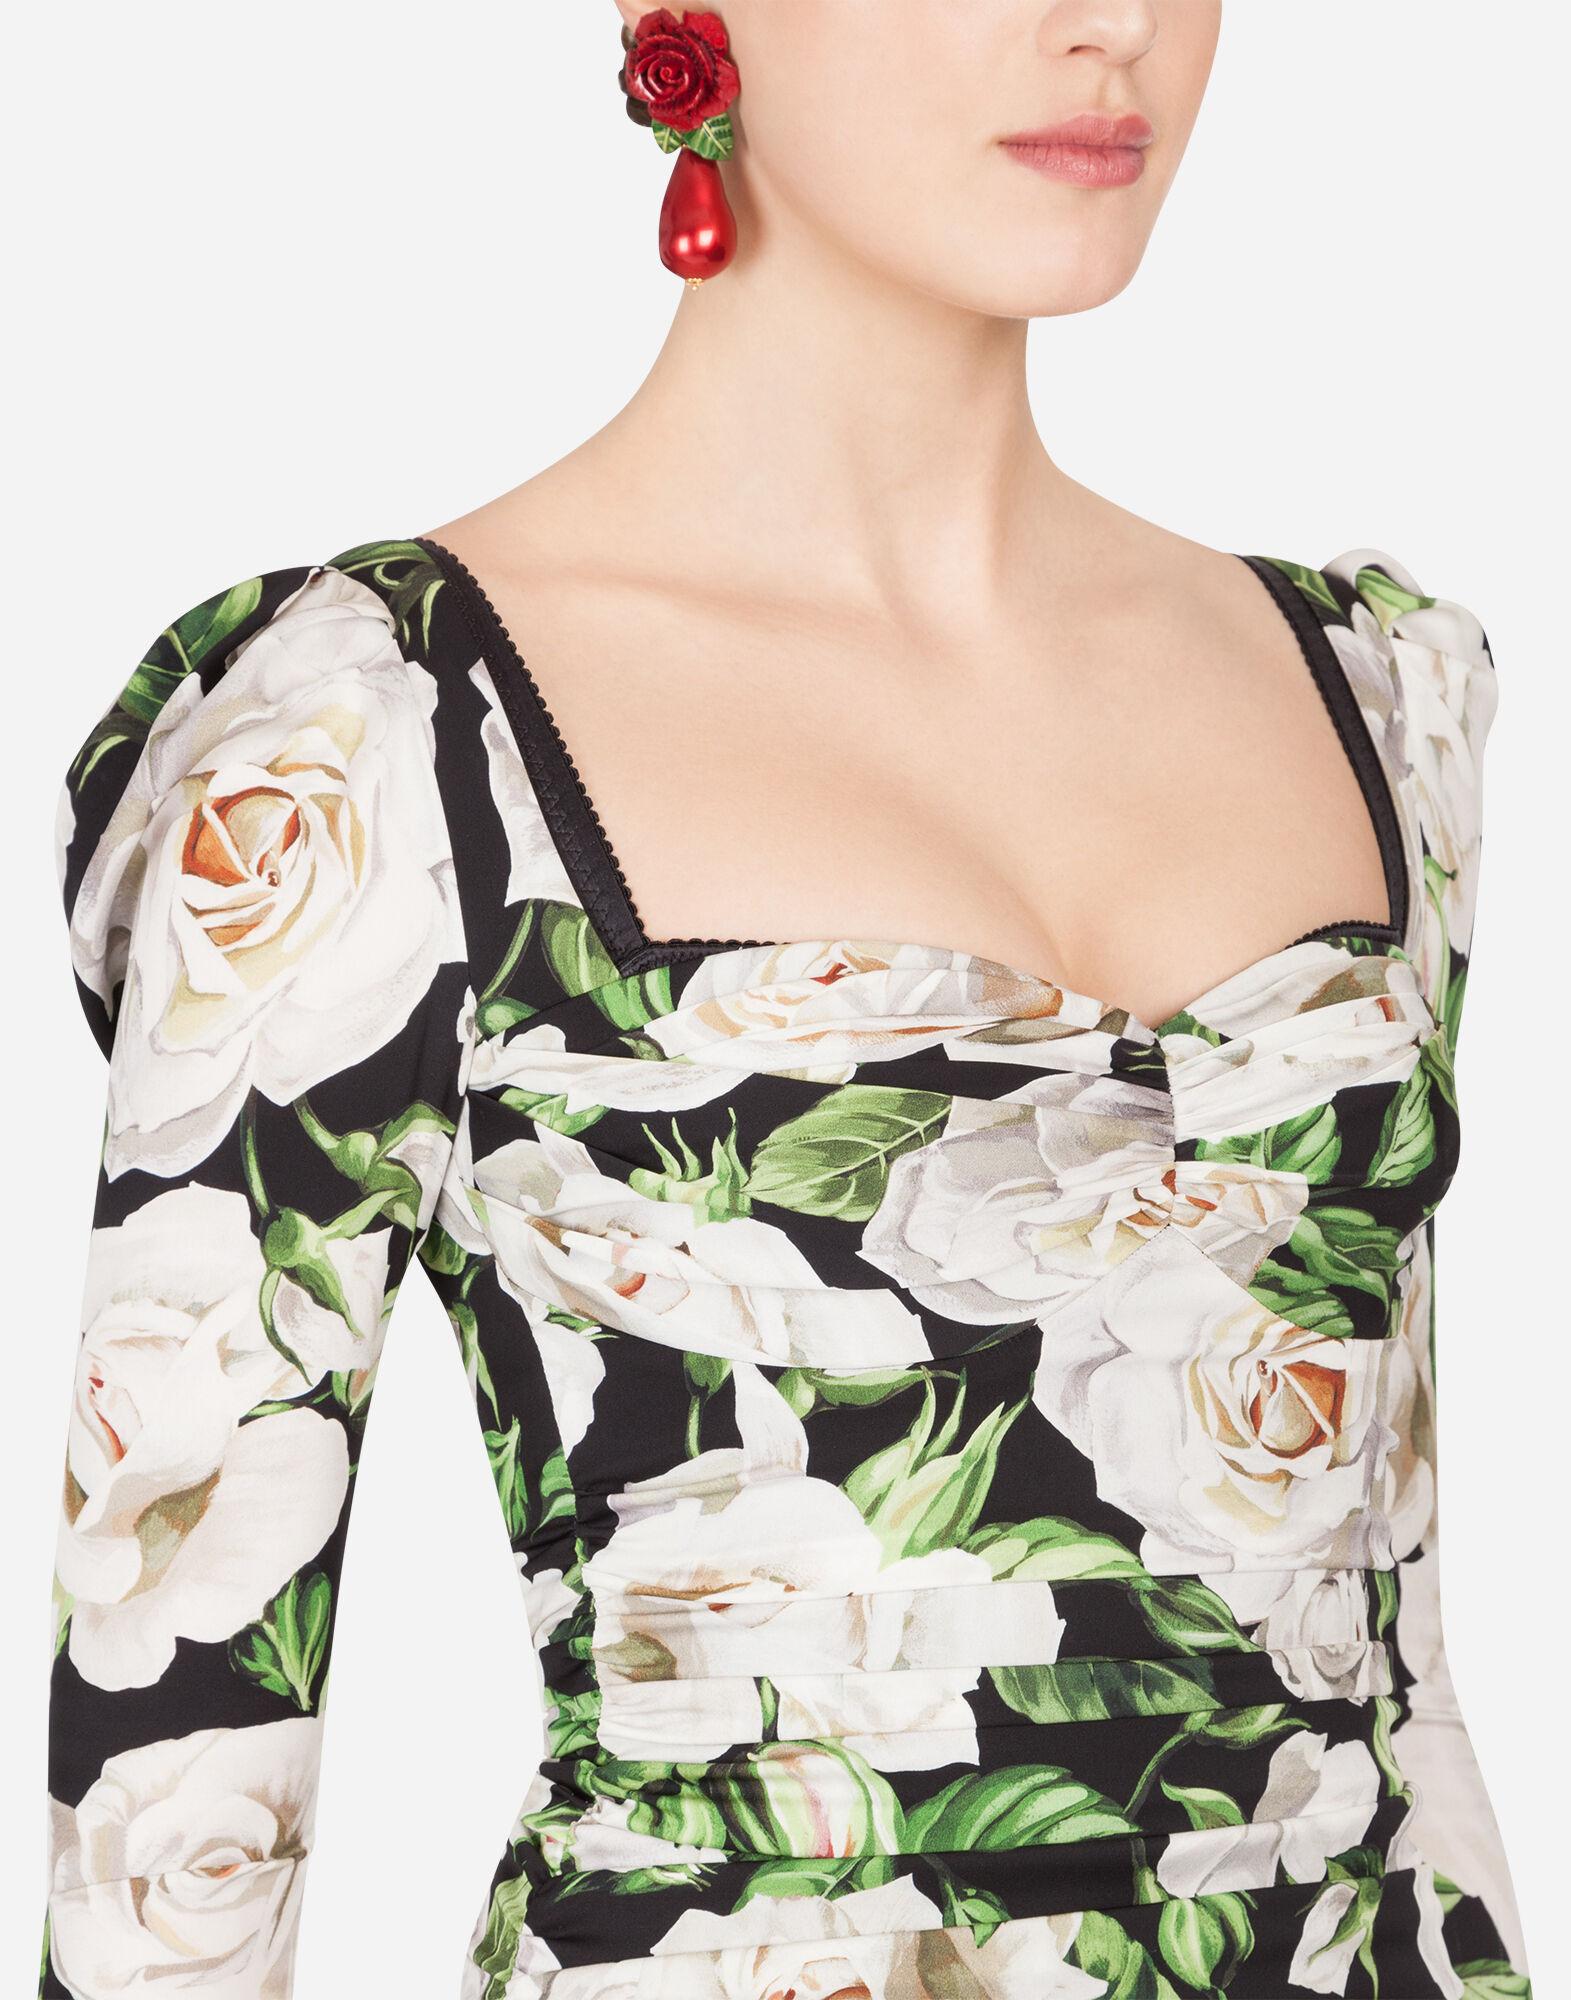 Dolce & Gabbana Silk Rose Print Charmeuse Midi Dress in Floral 